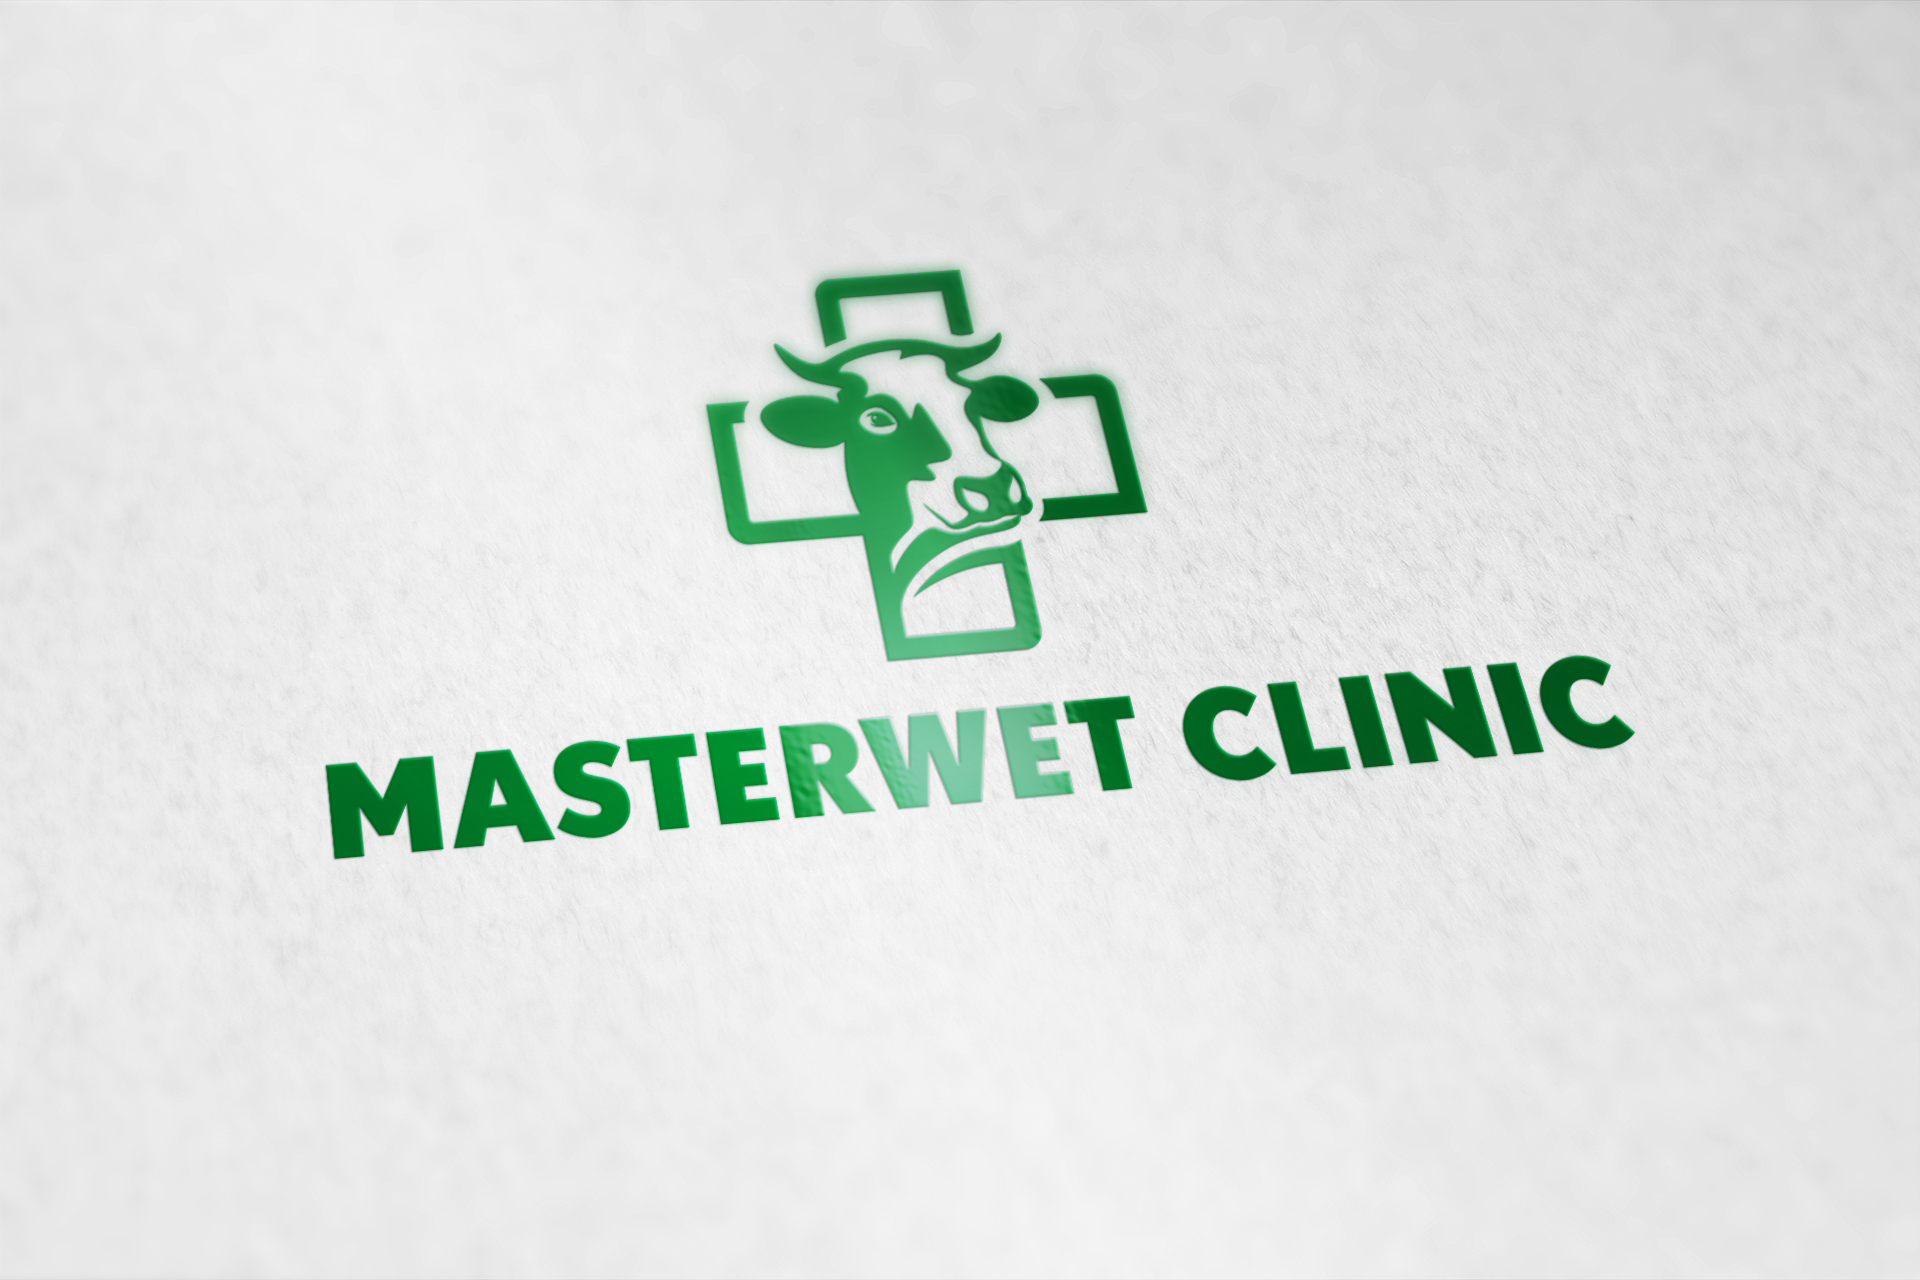 Masterwet Clinic - logo